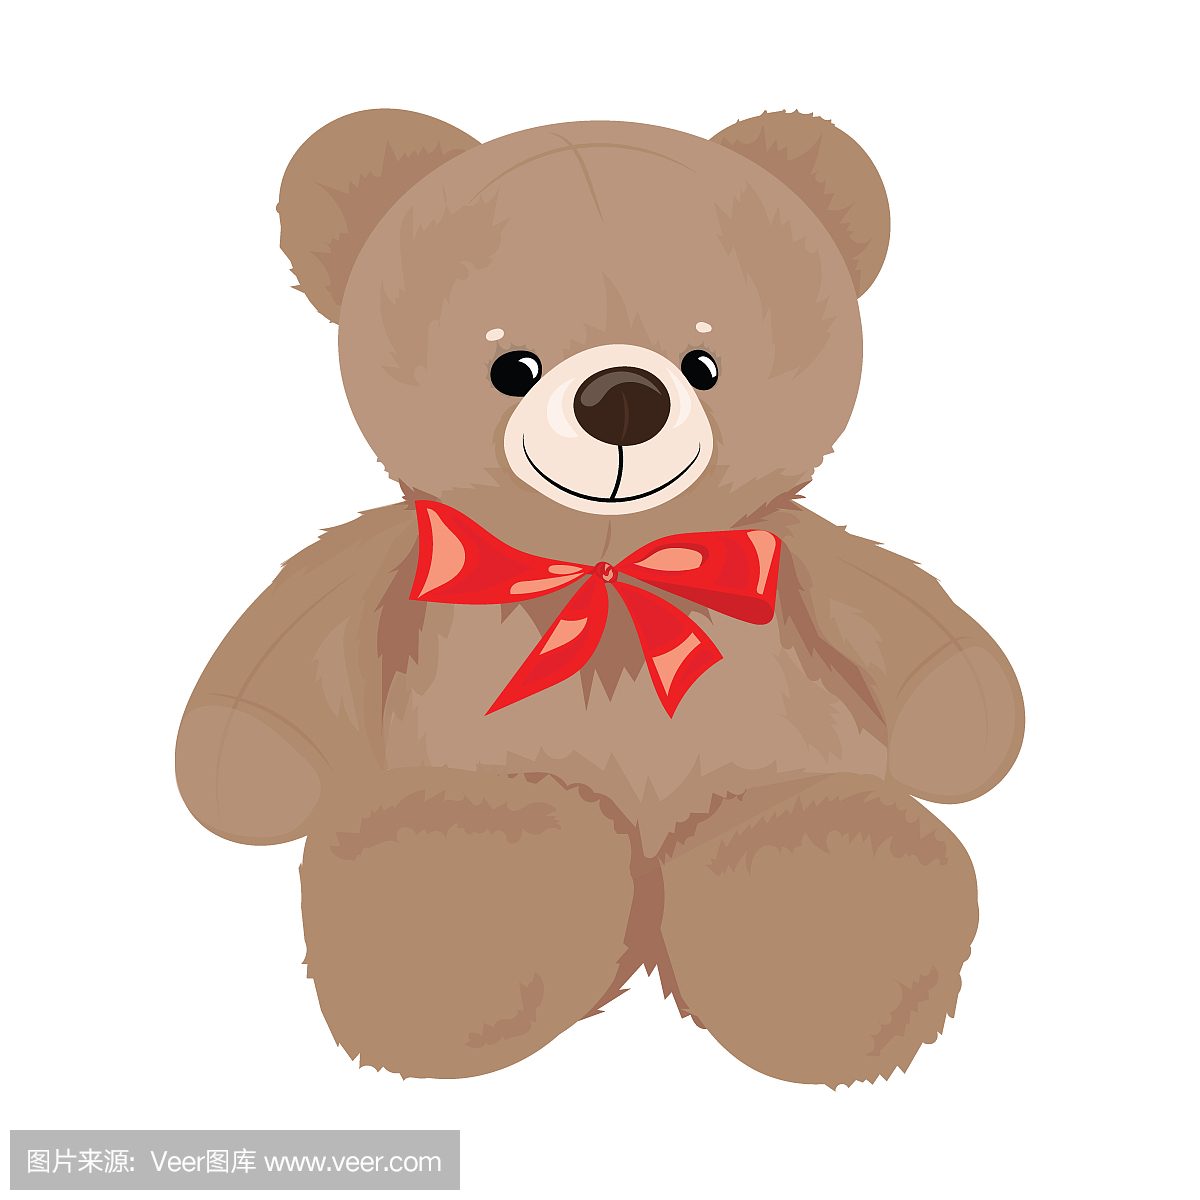 Cartoon teddy bear with a red bow. Plush toy b